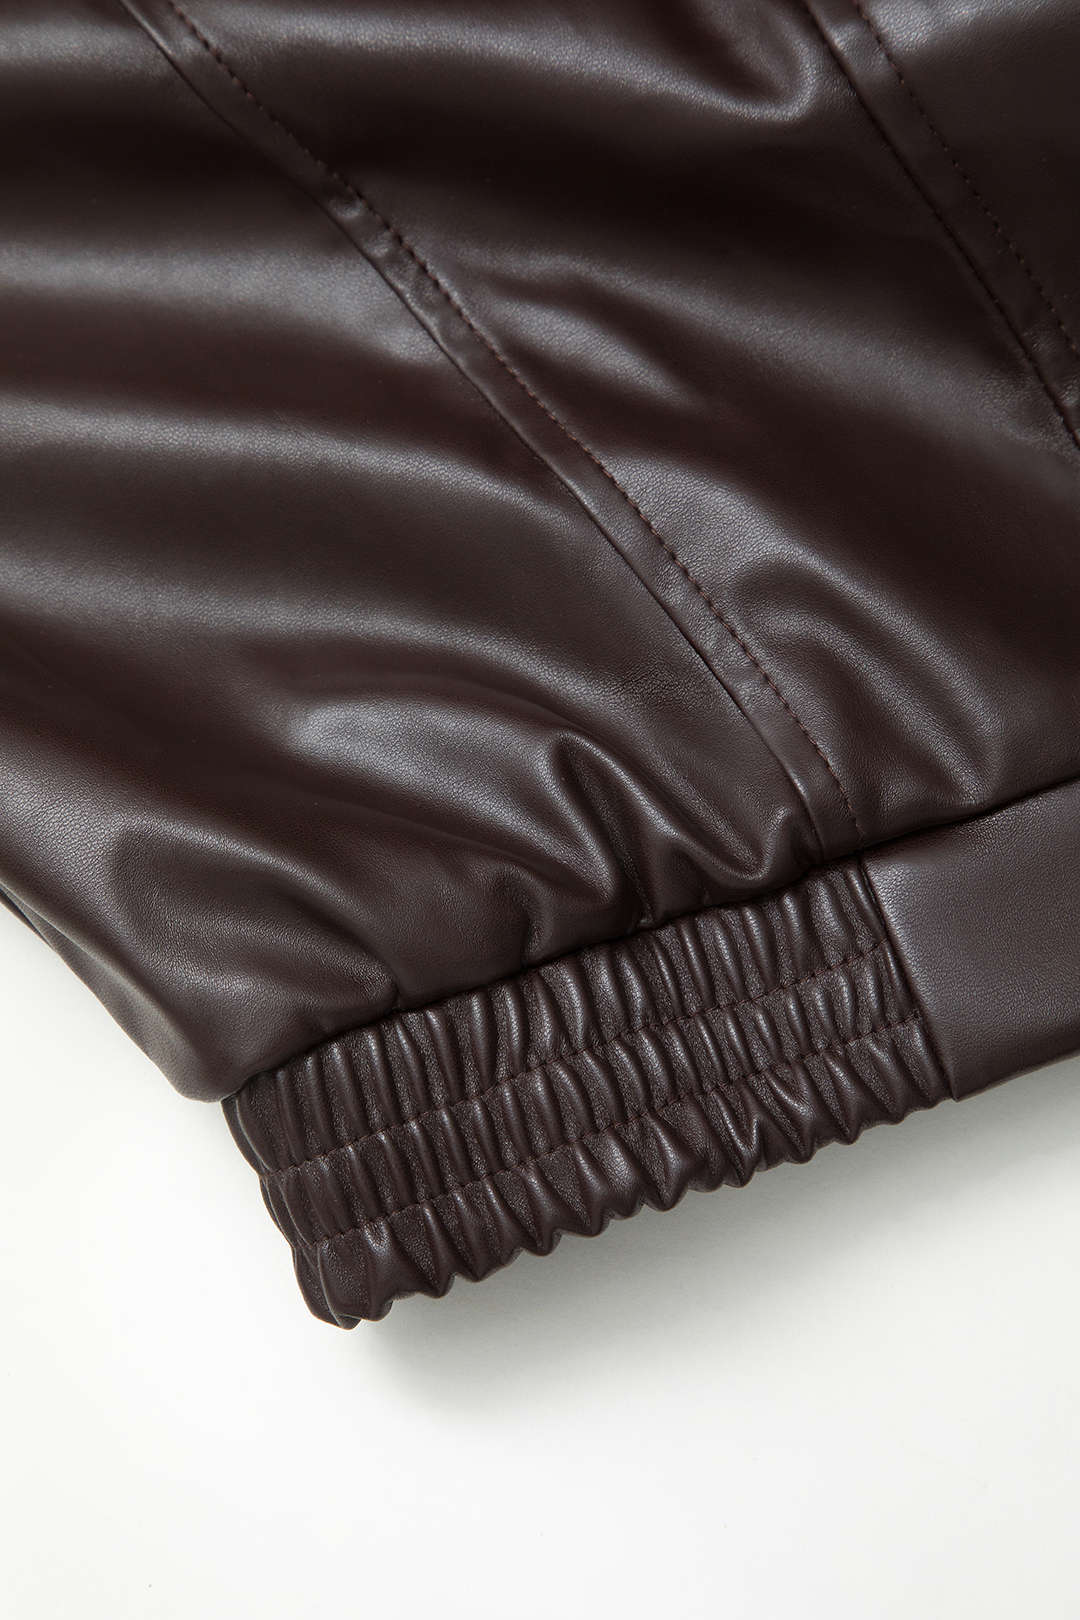 Retro Faux Leather Zip Up Jacket